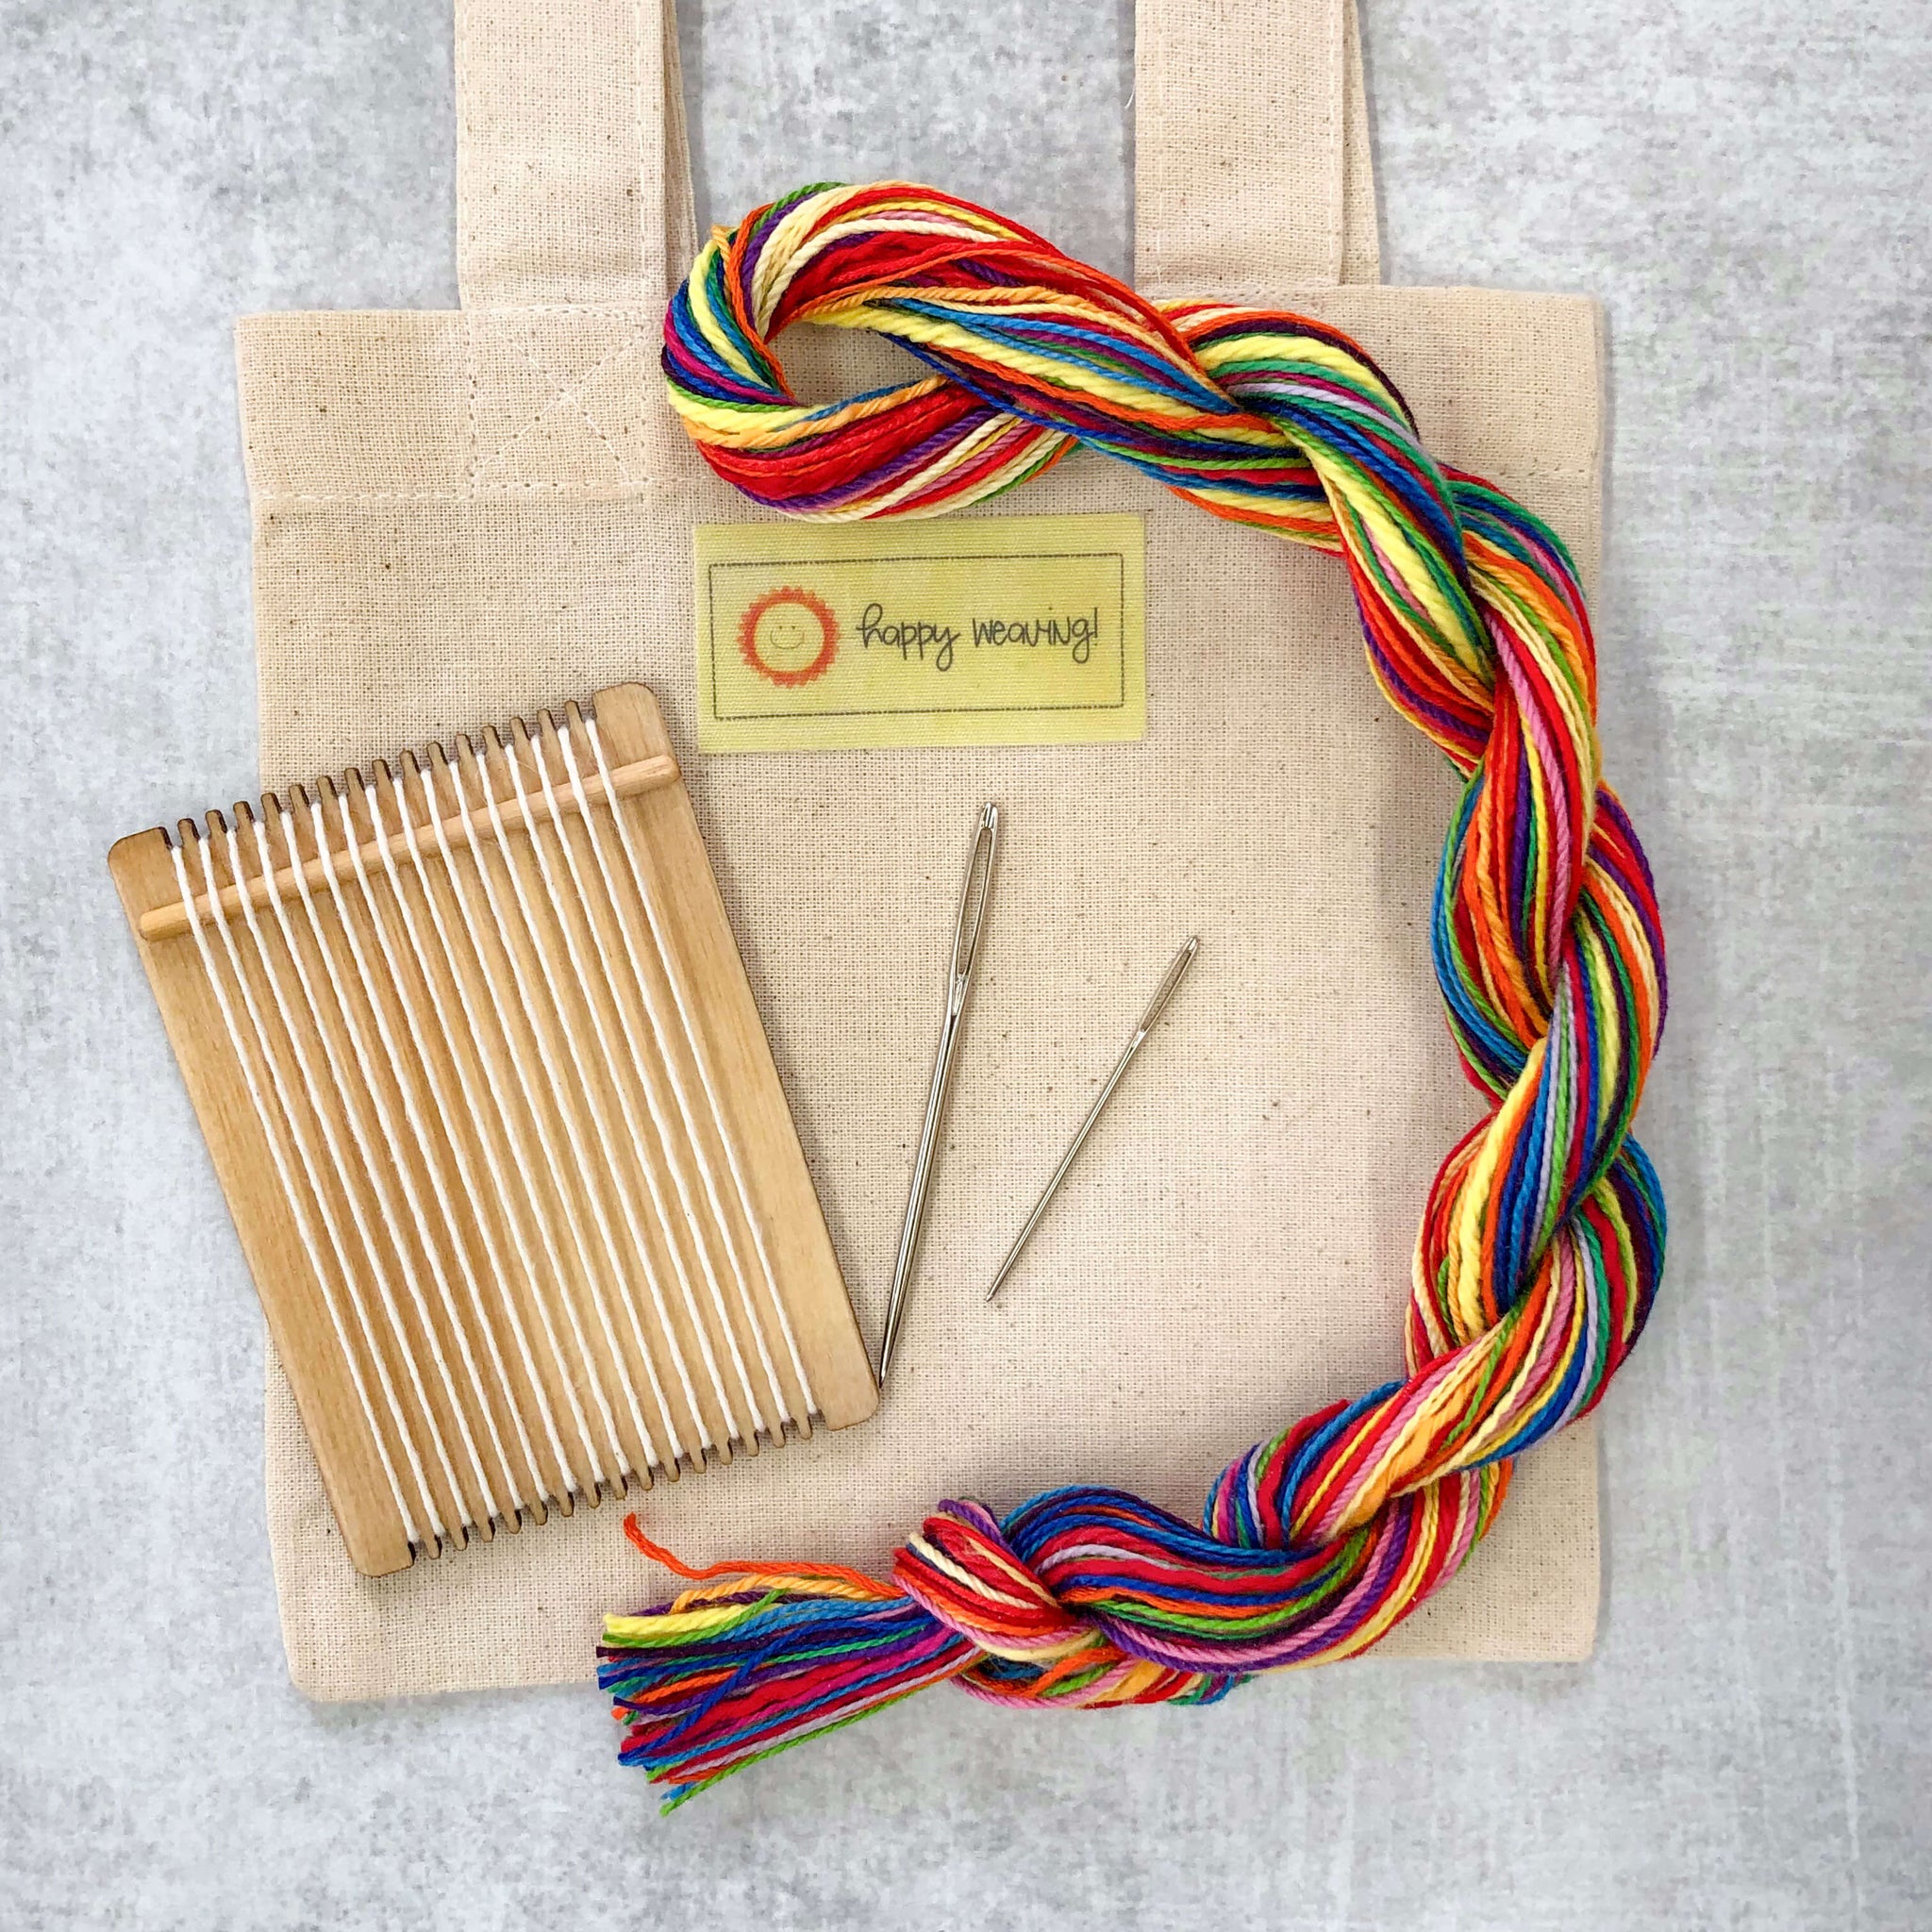 Tiny Loom Kit - Rainbow Colors - The Creativity Patch - Lucy Jennings